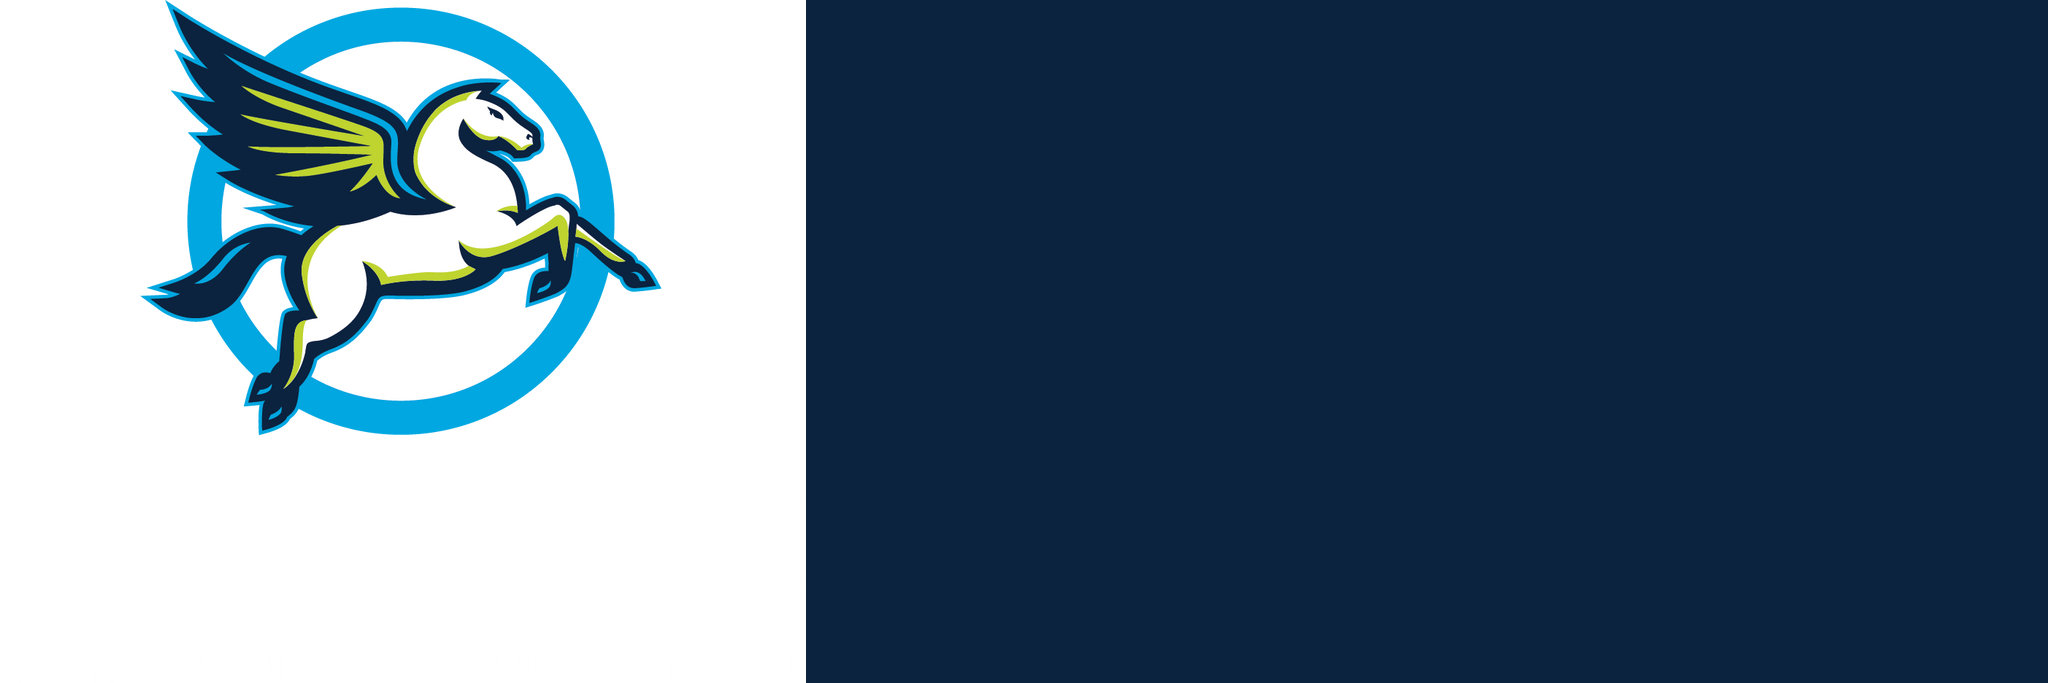 Dallas Wings Community Foundation logo